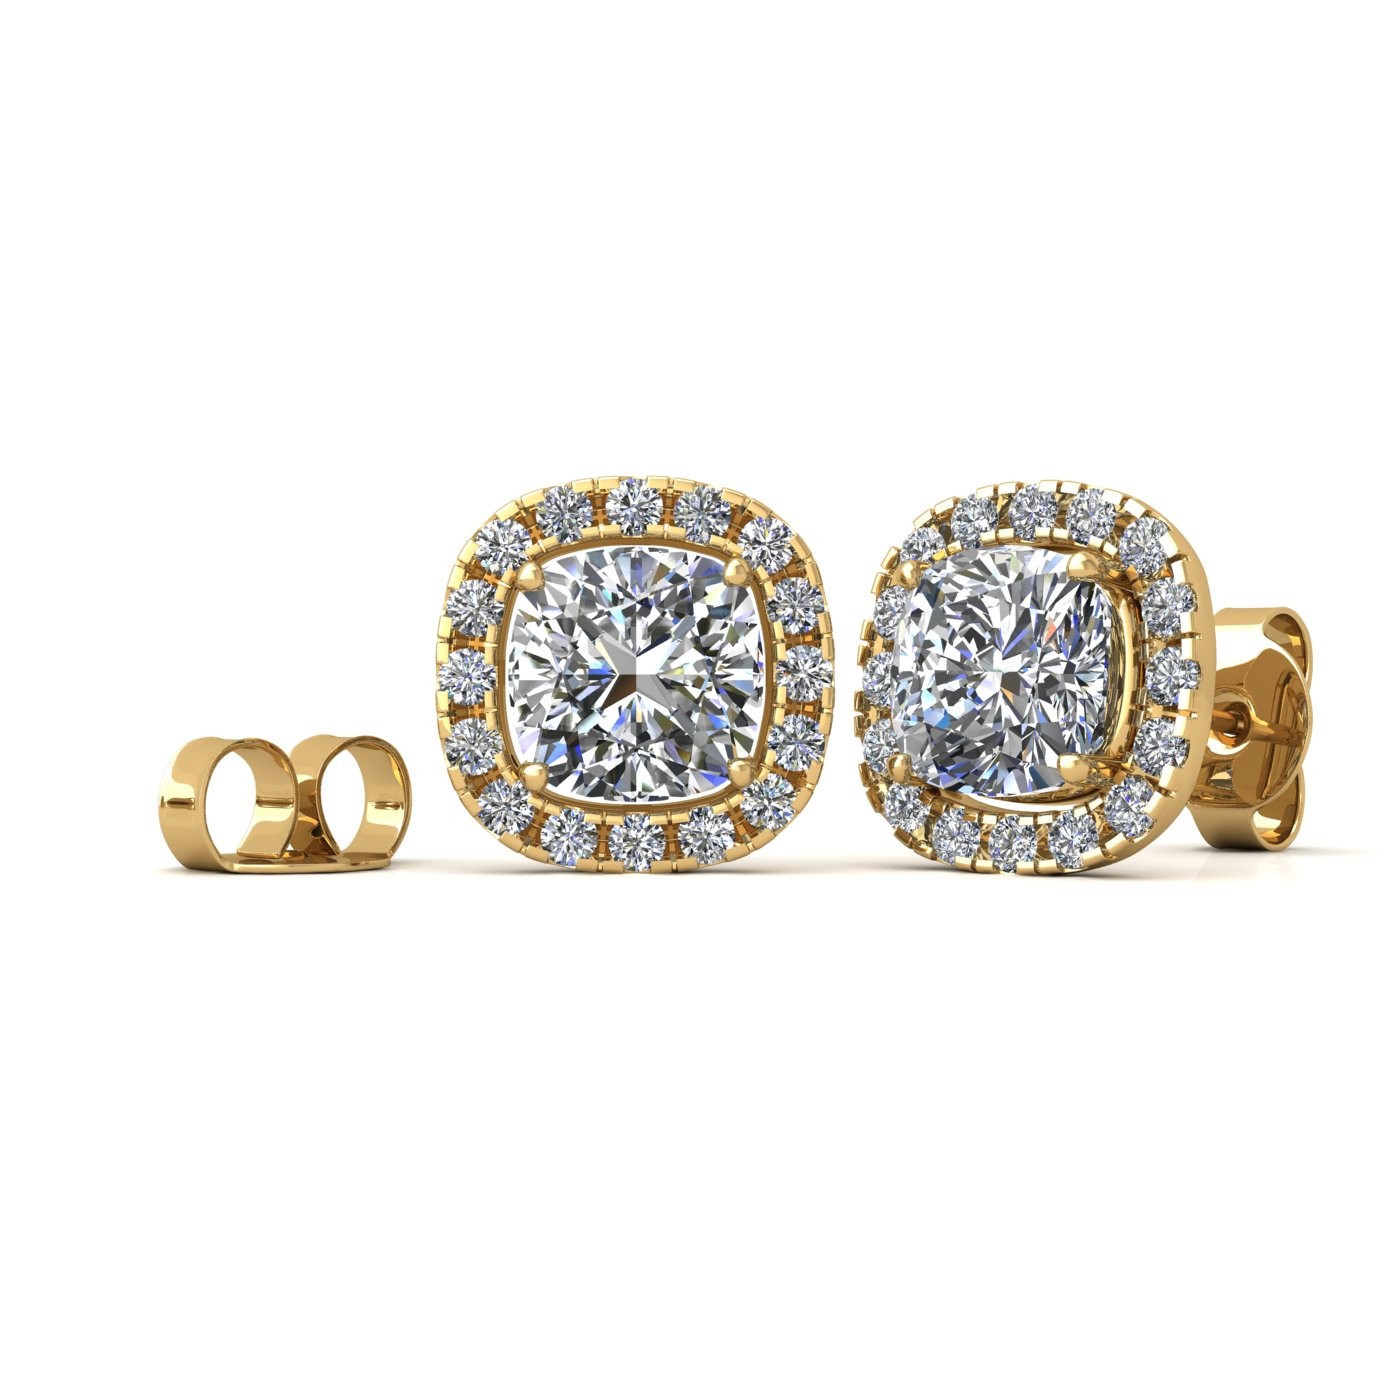 18k yellow gold 1,0 ct each (2,0 tcw) 4 prongs cushion shape diamond earrings with diamond pavÉ set halo Photos & images